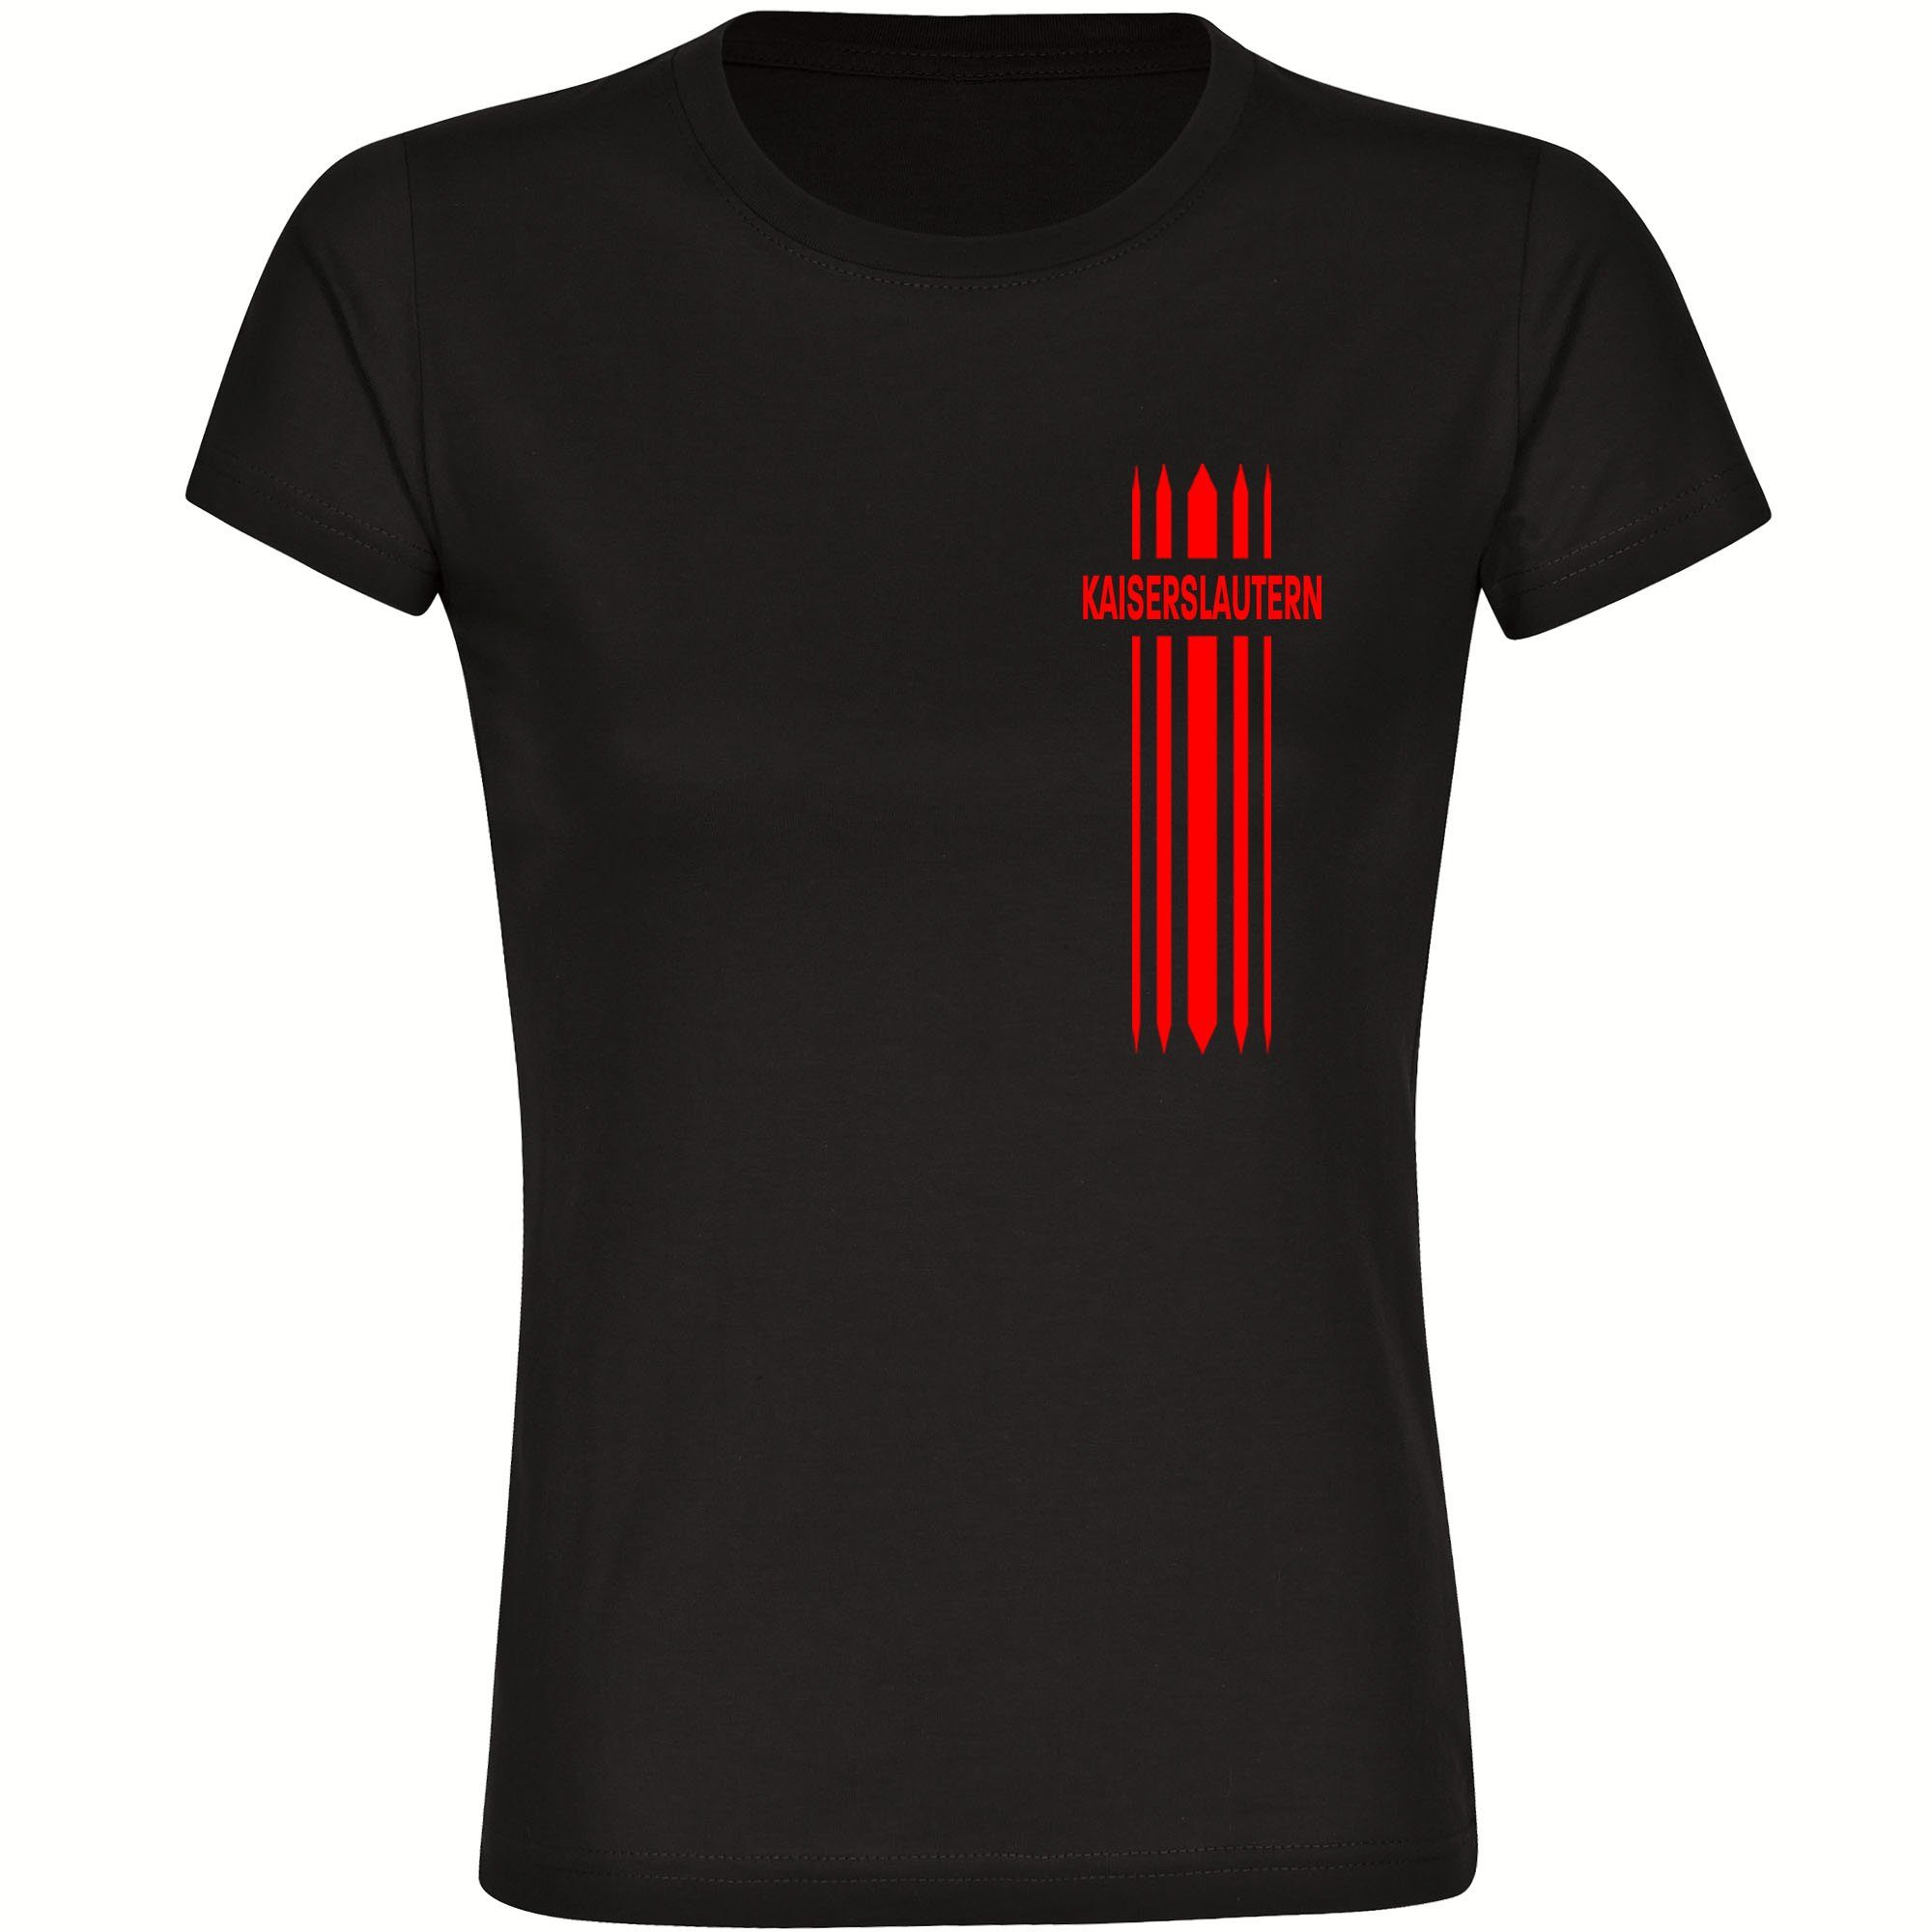 multifanshop T-Shirt Damen Kaiserslautern - Streifen - Frauen